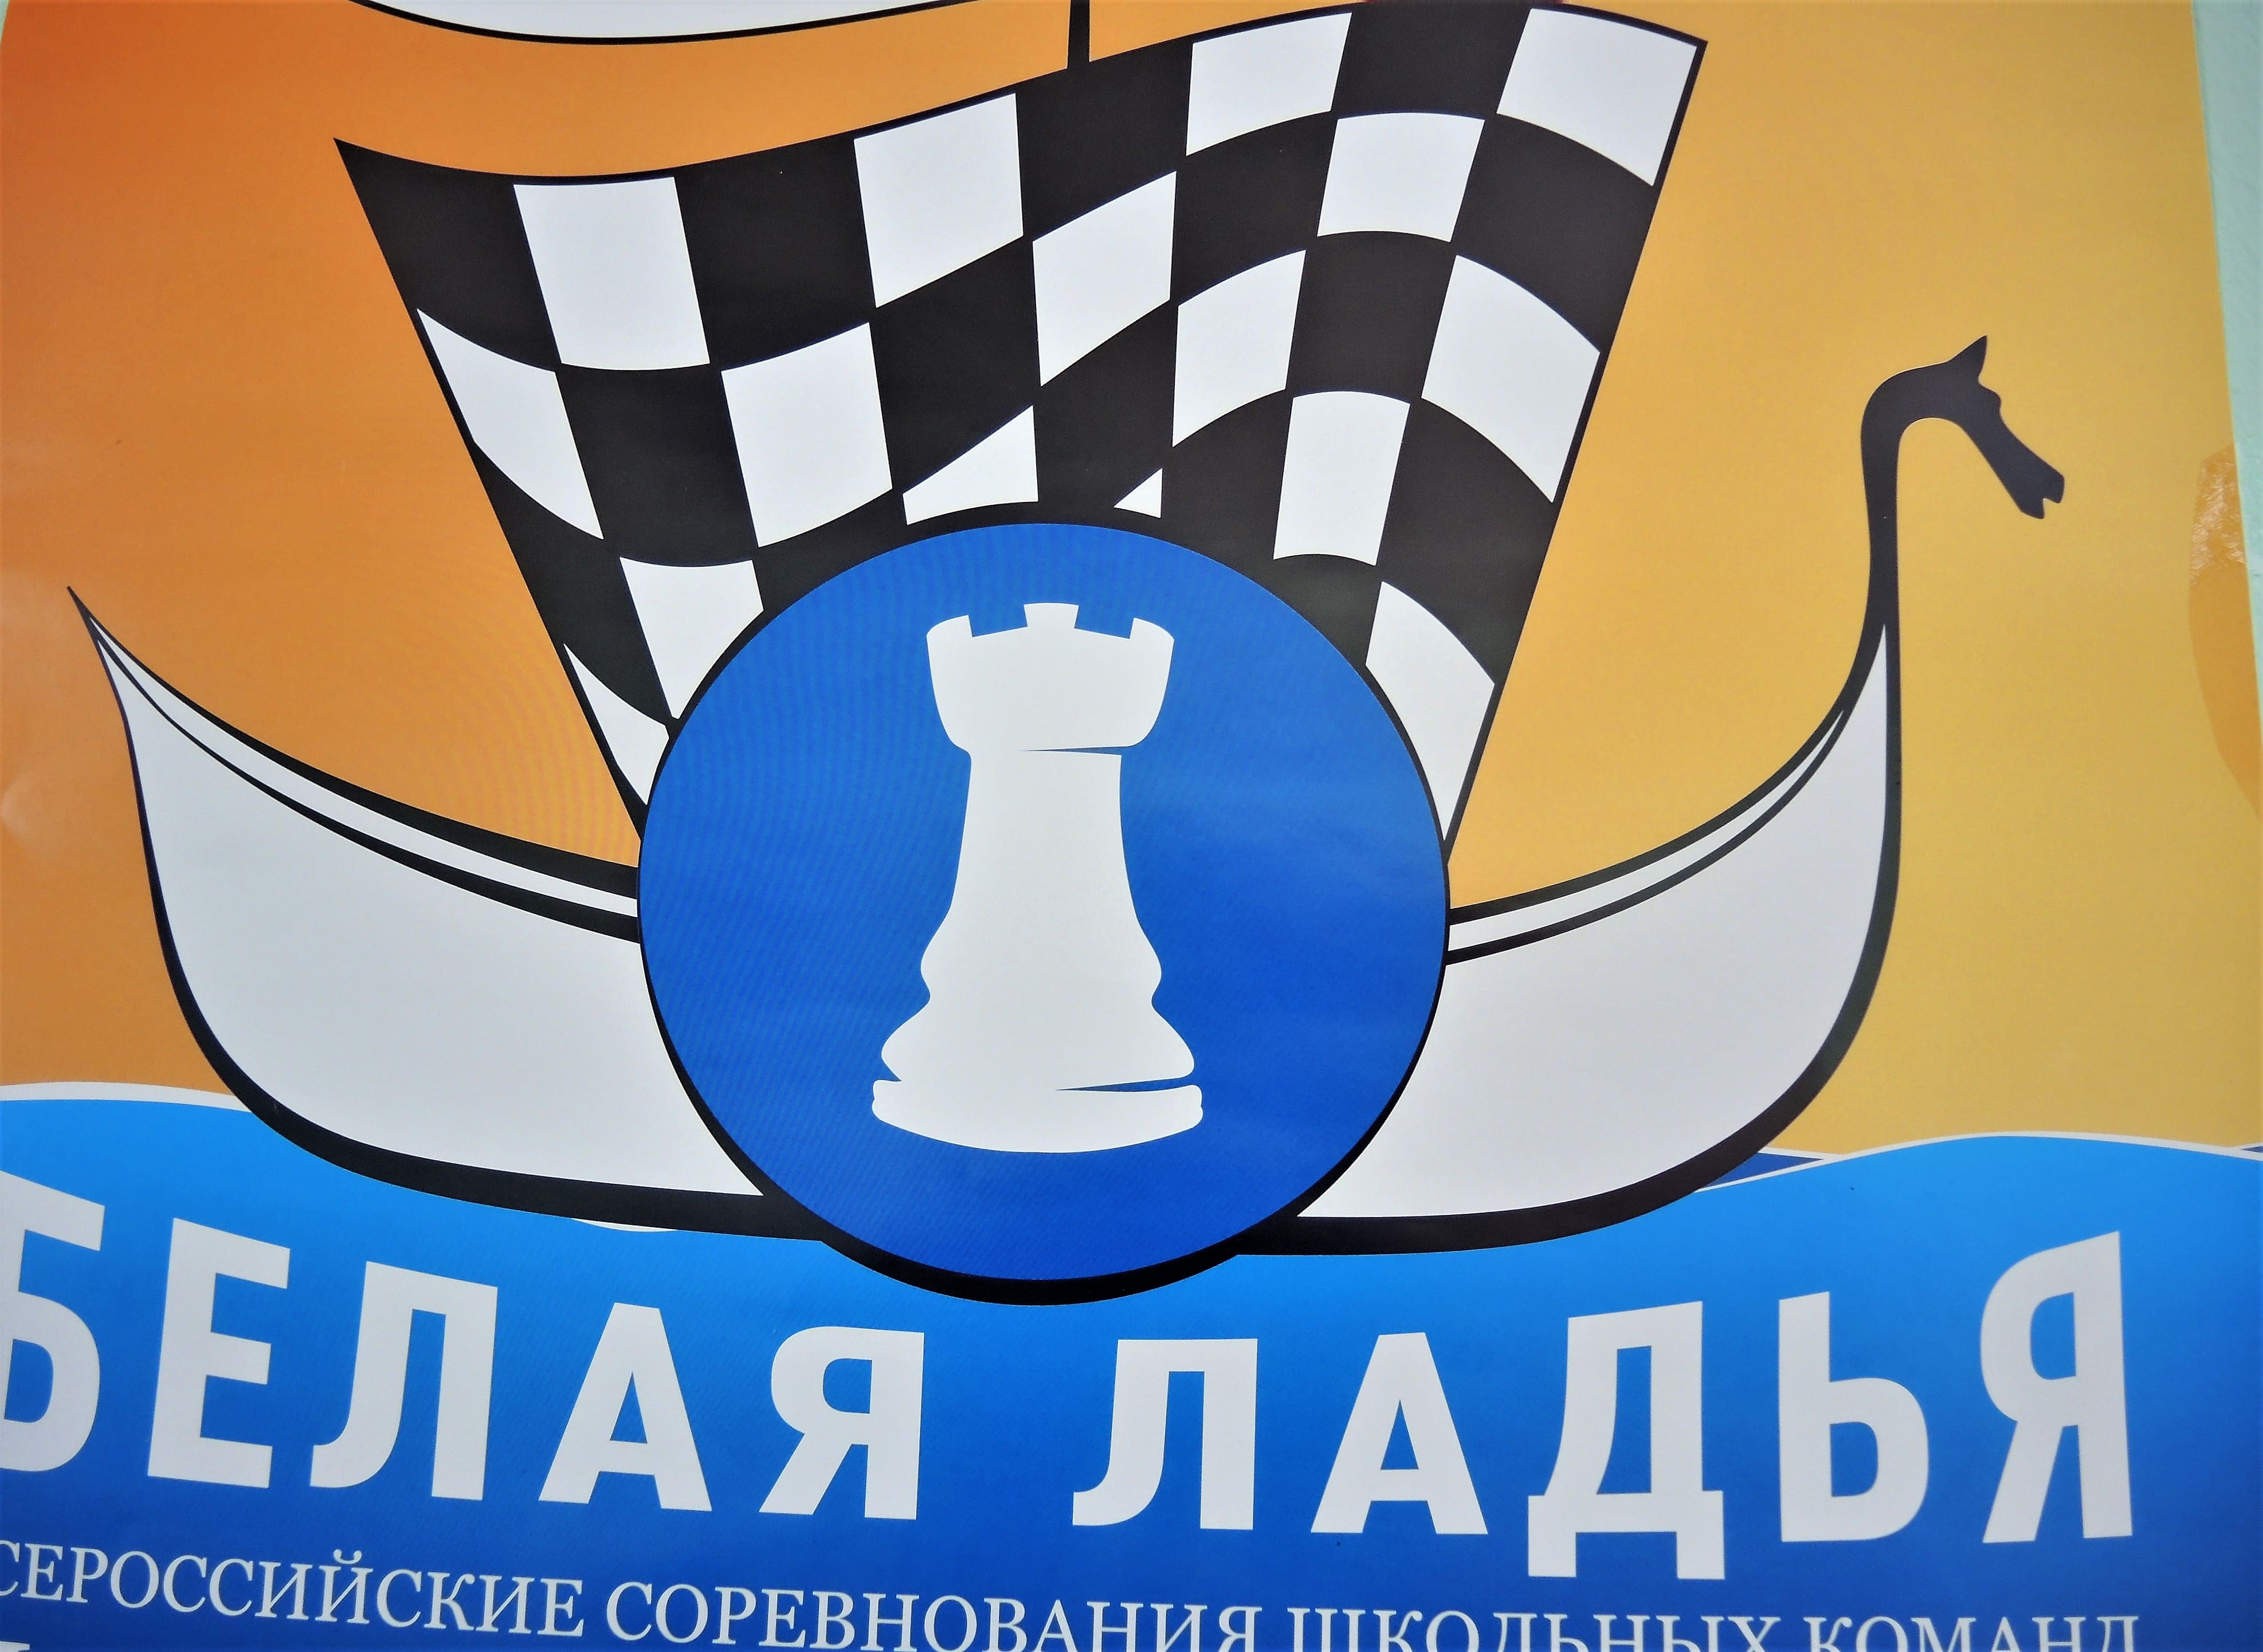 Имя ладья. Турнир по шахматам белая Ладья. Белая Ладья Ольгинка 2022. Белая Ладья 2022 шахматы. Соревнований по шахматам «белая Ладья».